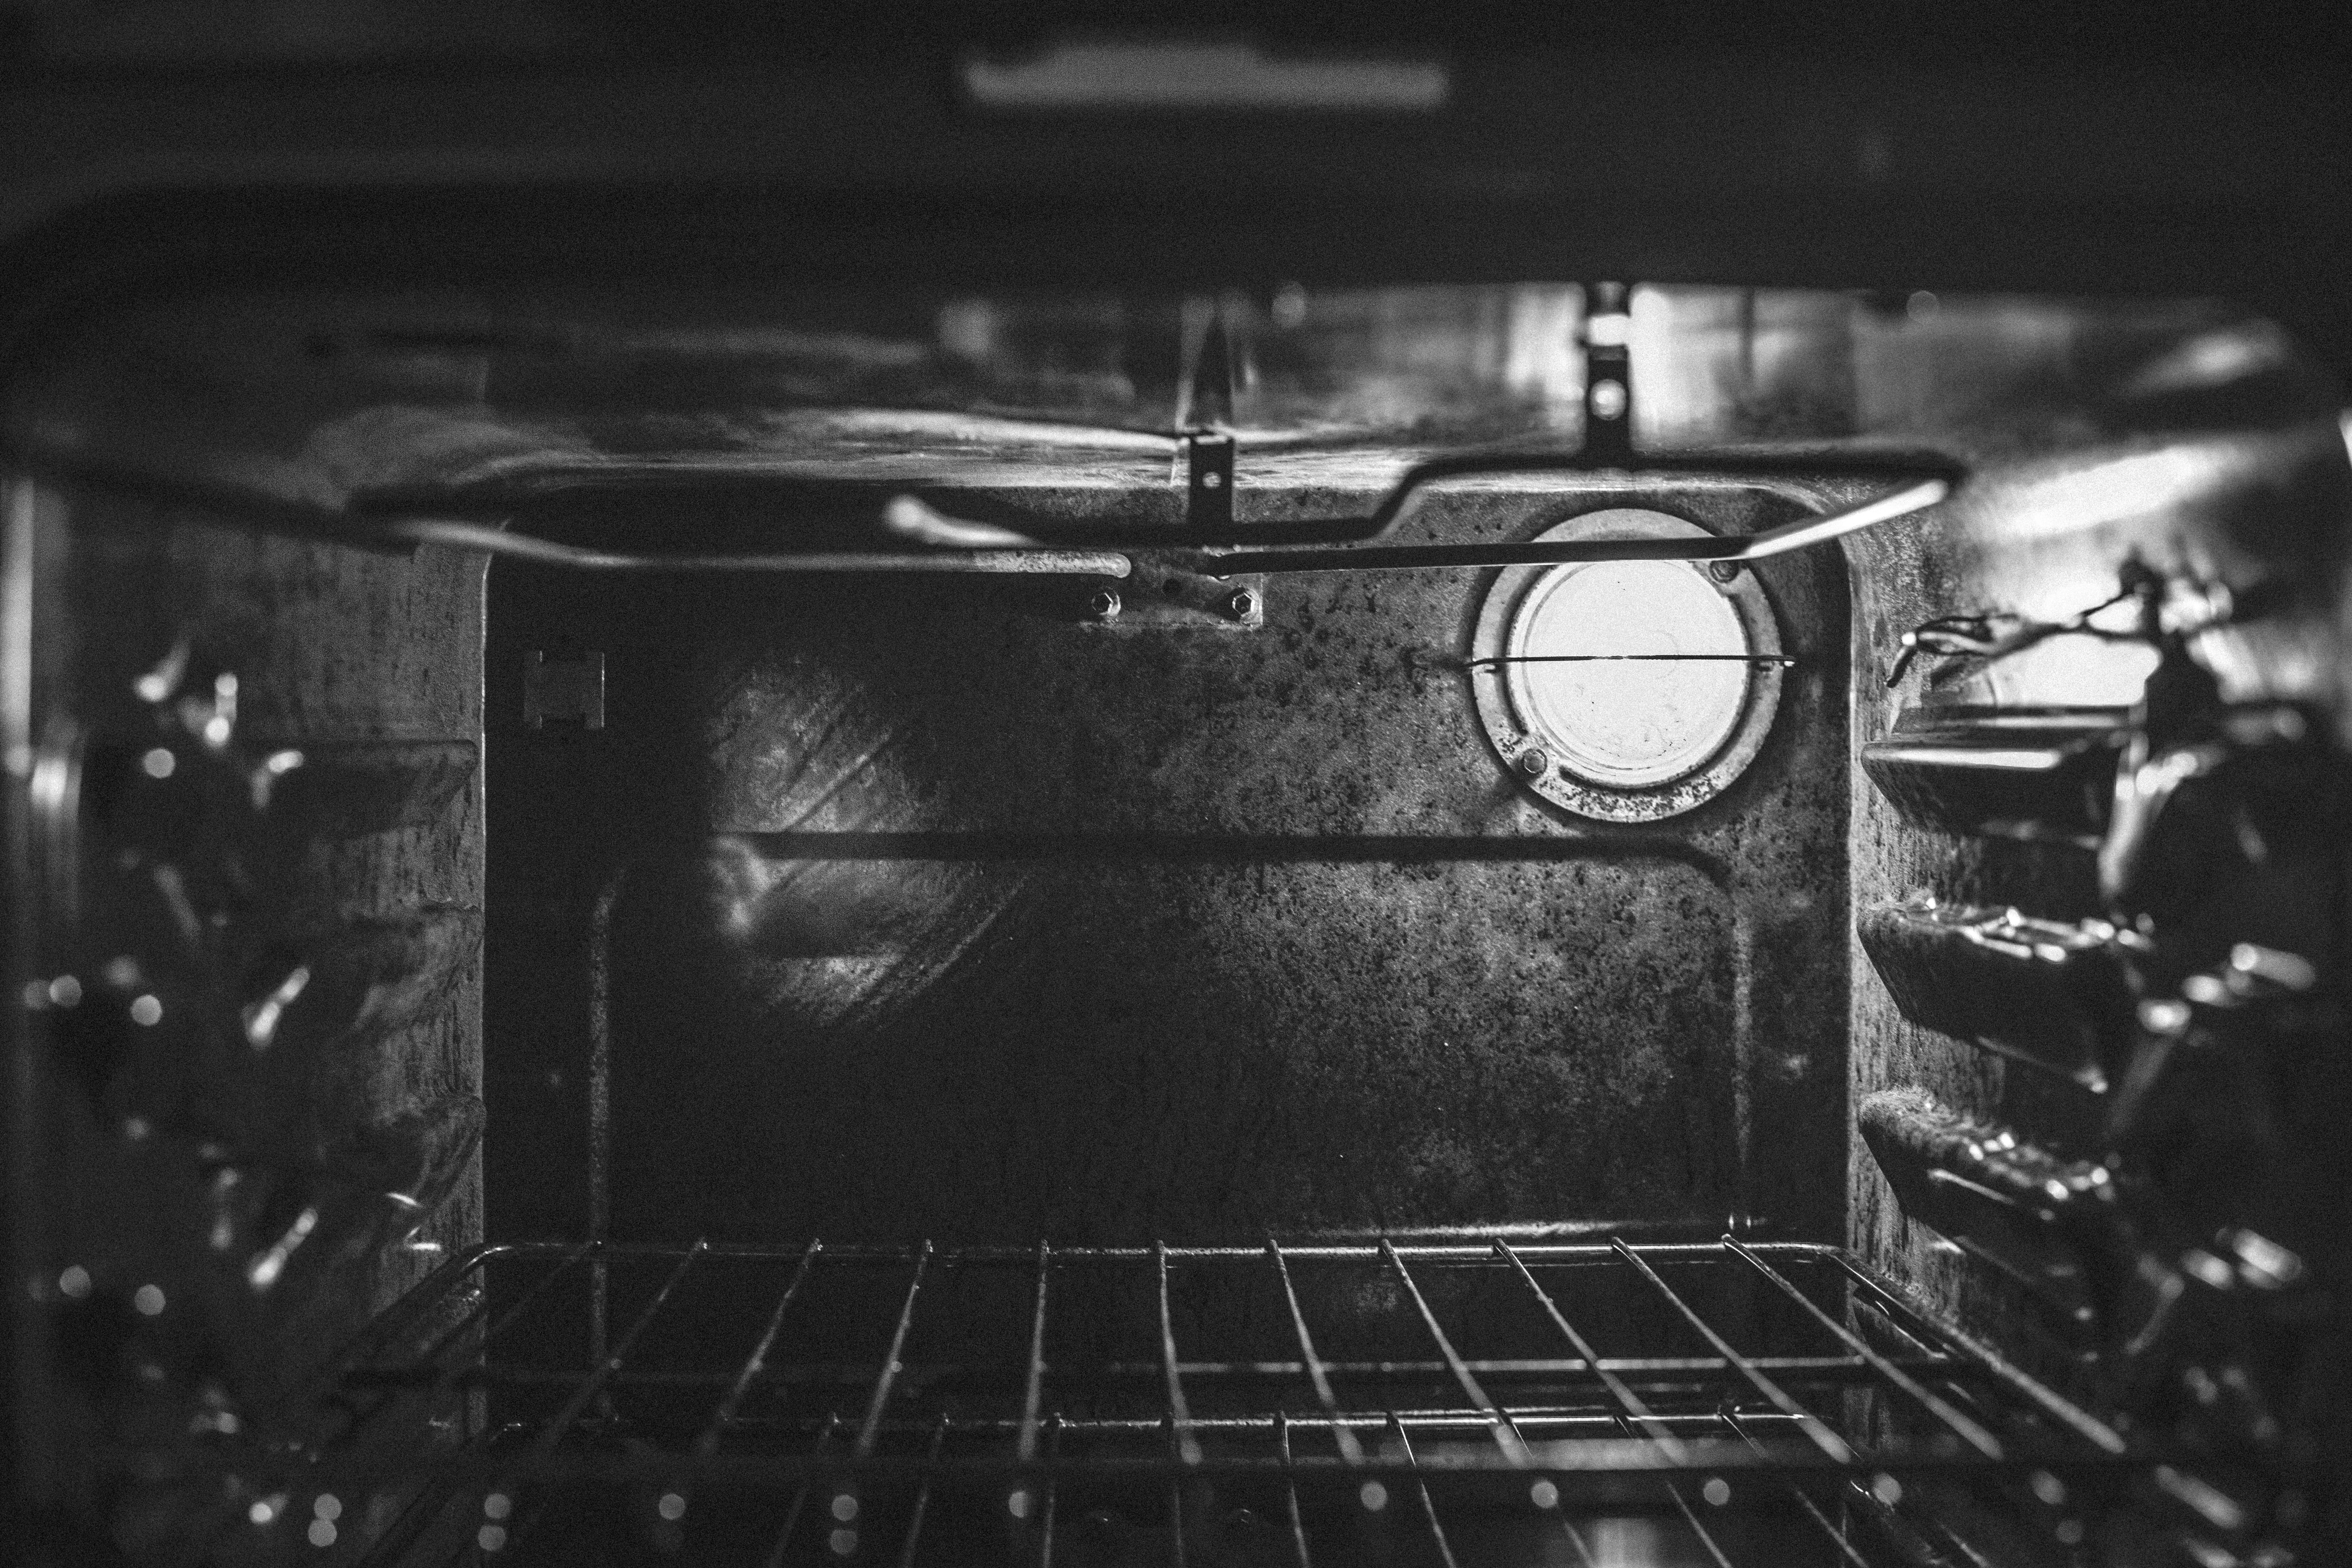 black oven interior free image